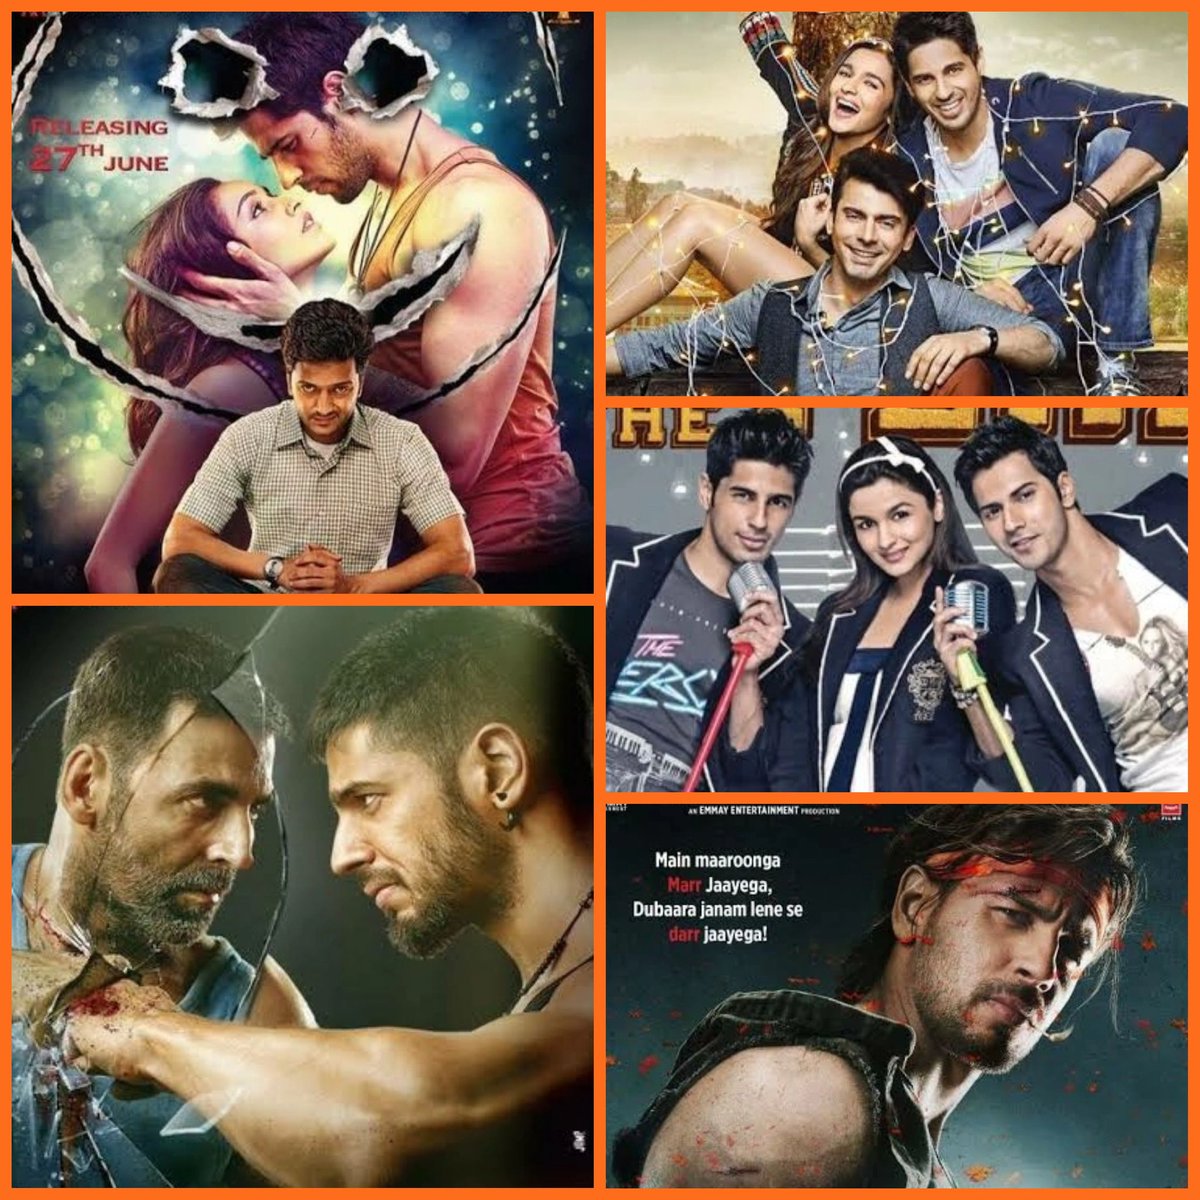 Top 5 Highest Grossing Films of #SidharthMalhotra in India

1)#EkVillian: ₹ 105.62 Cr
2)#Brothers: ₹ 82.47 Cr
3)#KapoorAndSons: ₹ 73.29 Cr
4)#SOTY: ₹ 70 Cr
5)#Marjaavaan: ₹ 47.78 Cr